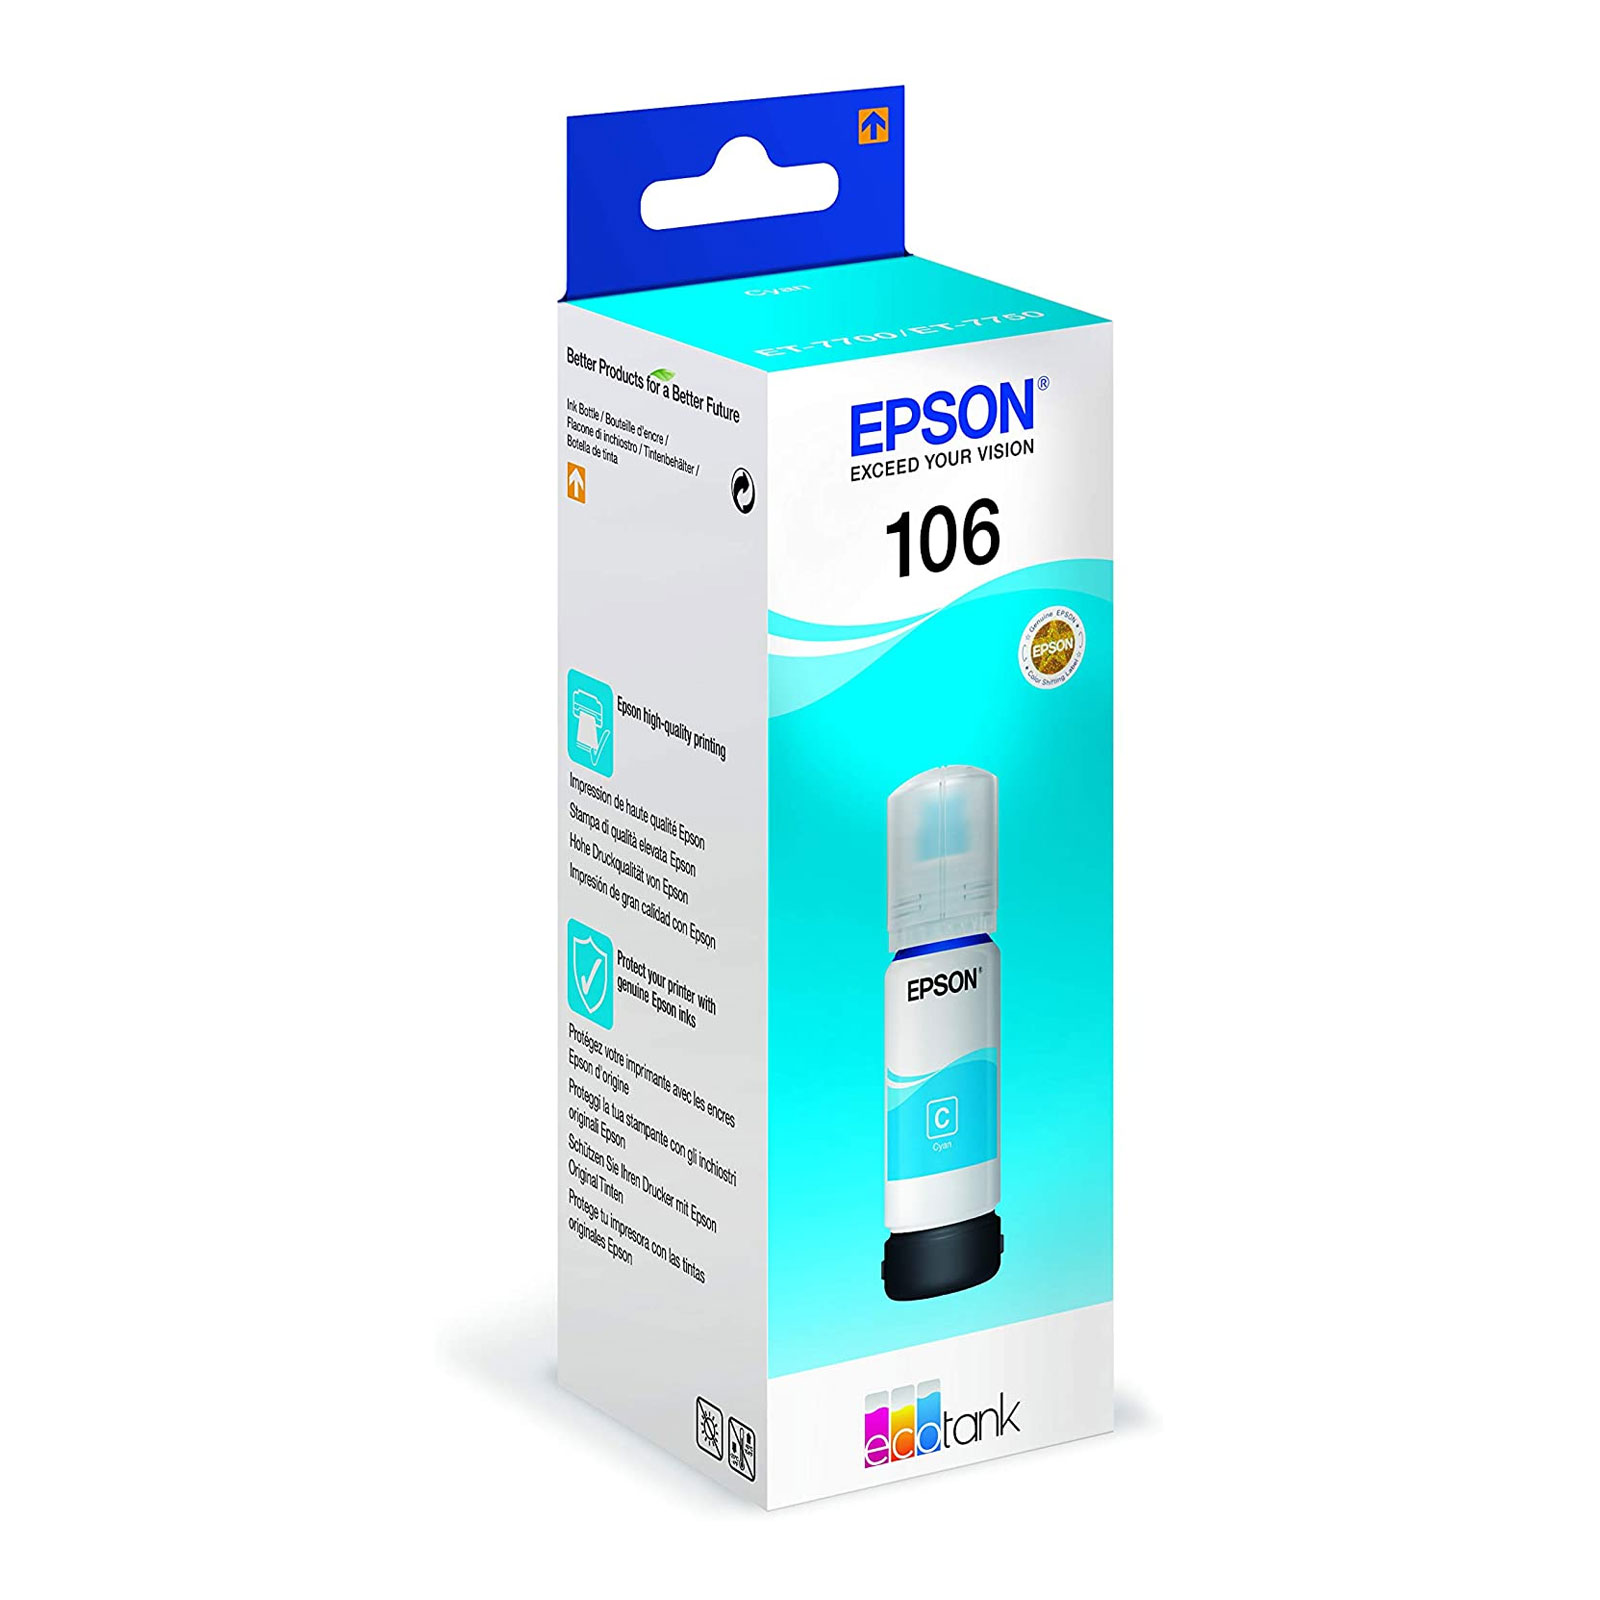 Epson C13T00R240 EcoTank ink bottle 106 Cyan